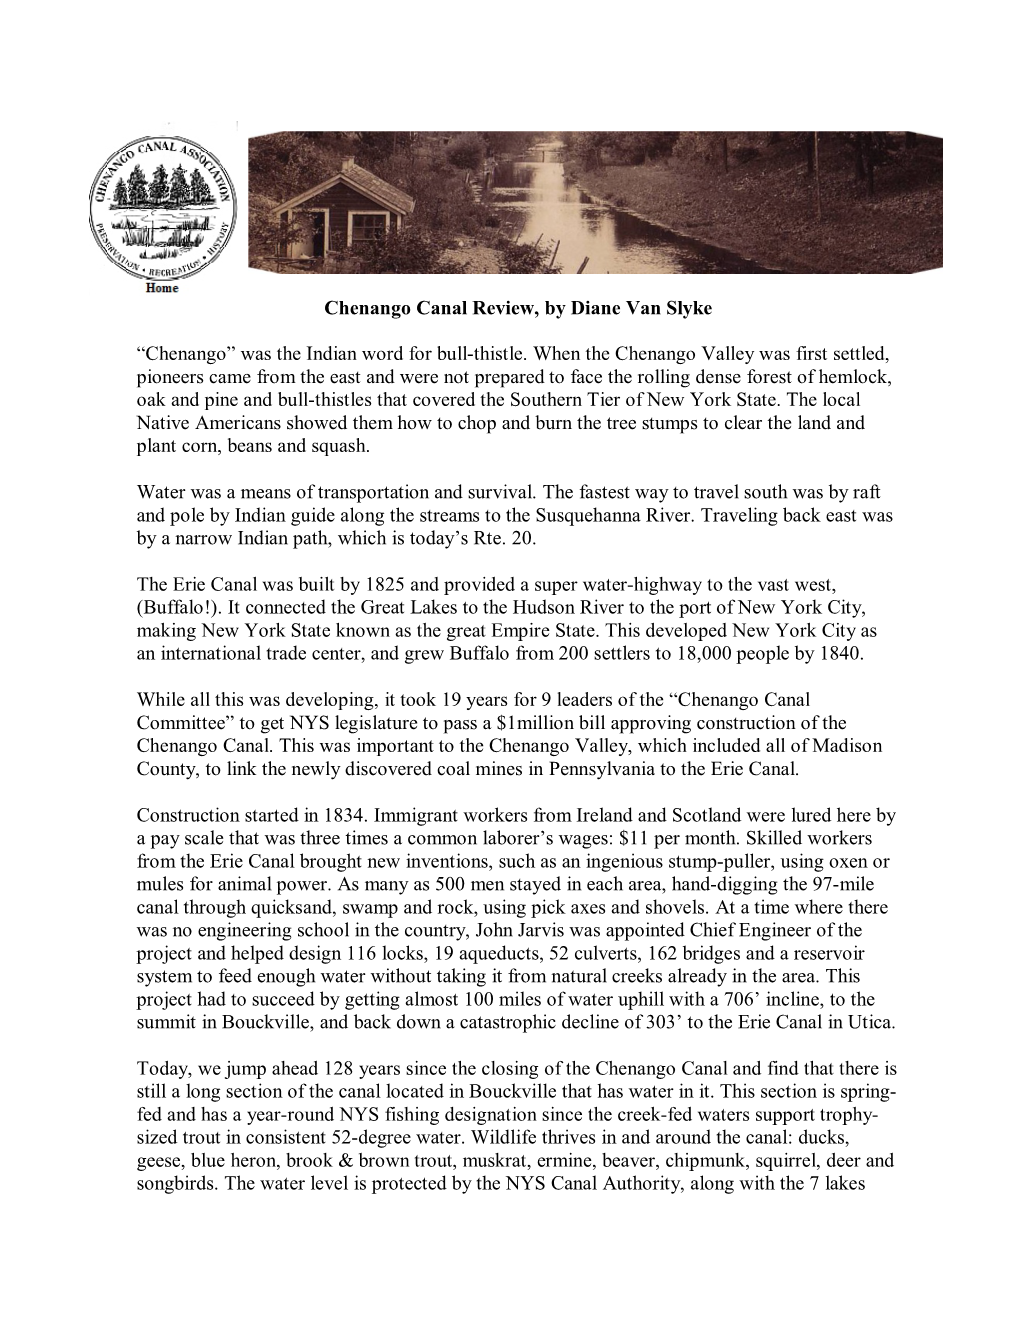 Chenango Canal History Review by Diane Van Slyke